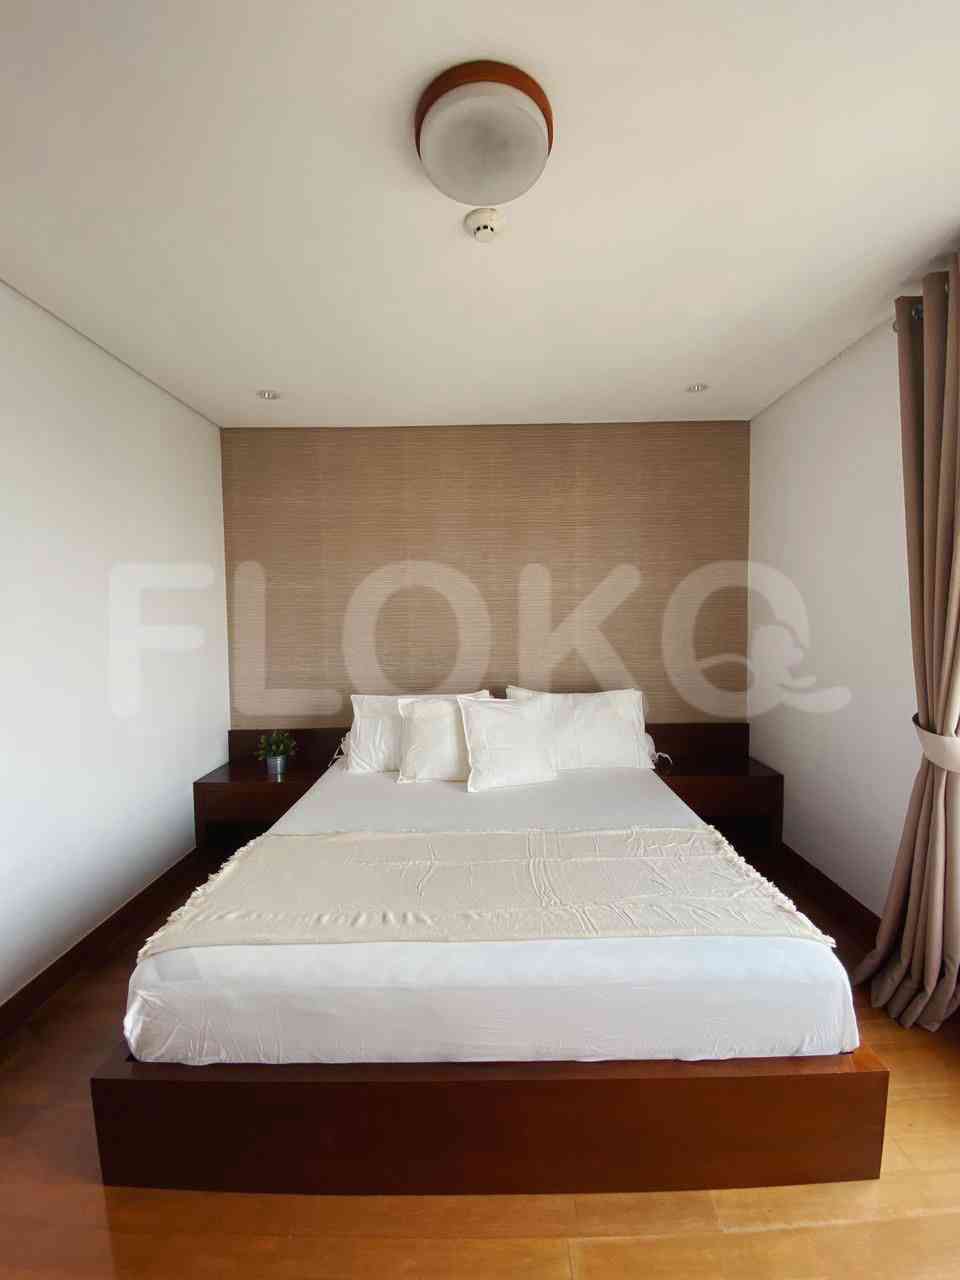 4 Bedroom on 26th Floor for Rent in Permata Hijau Suites Apartment - fpeb05 6